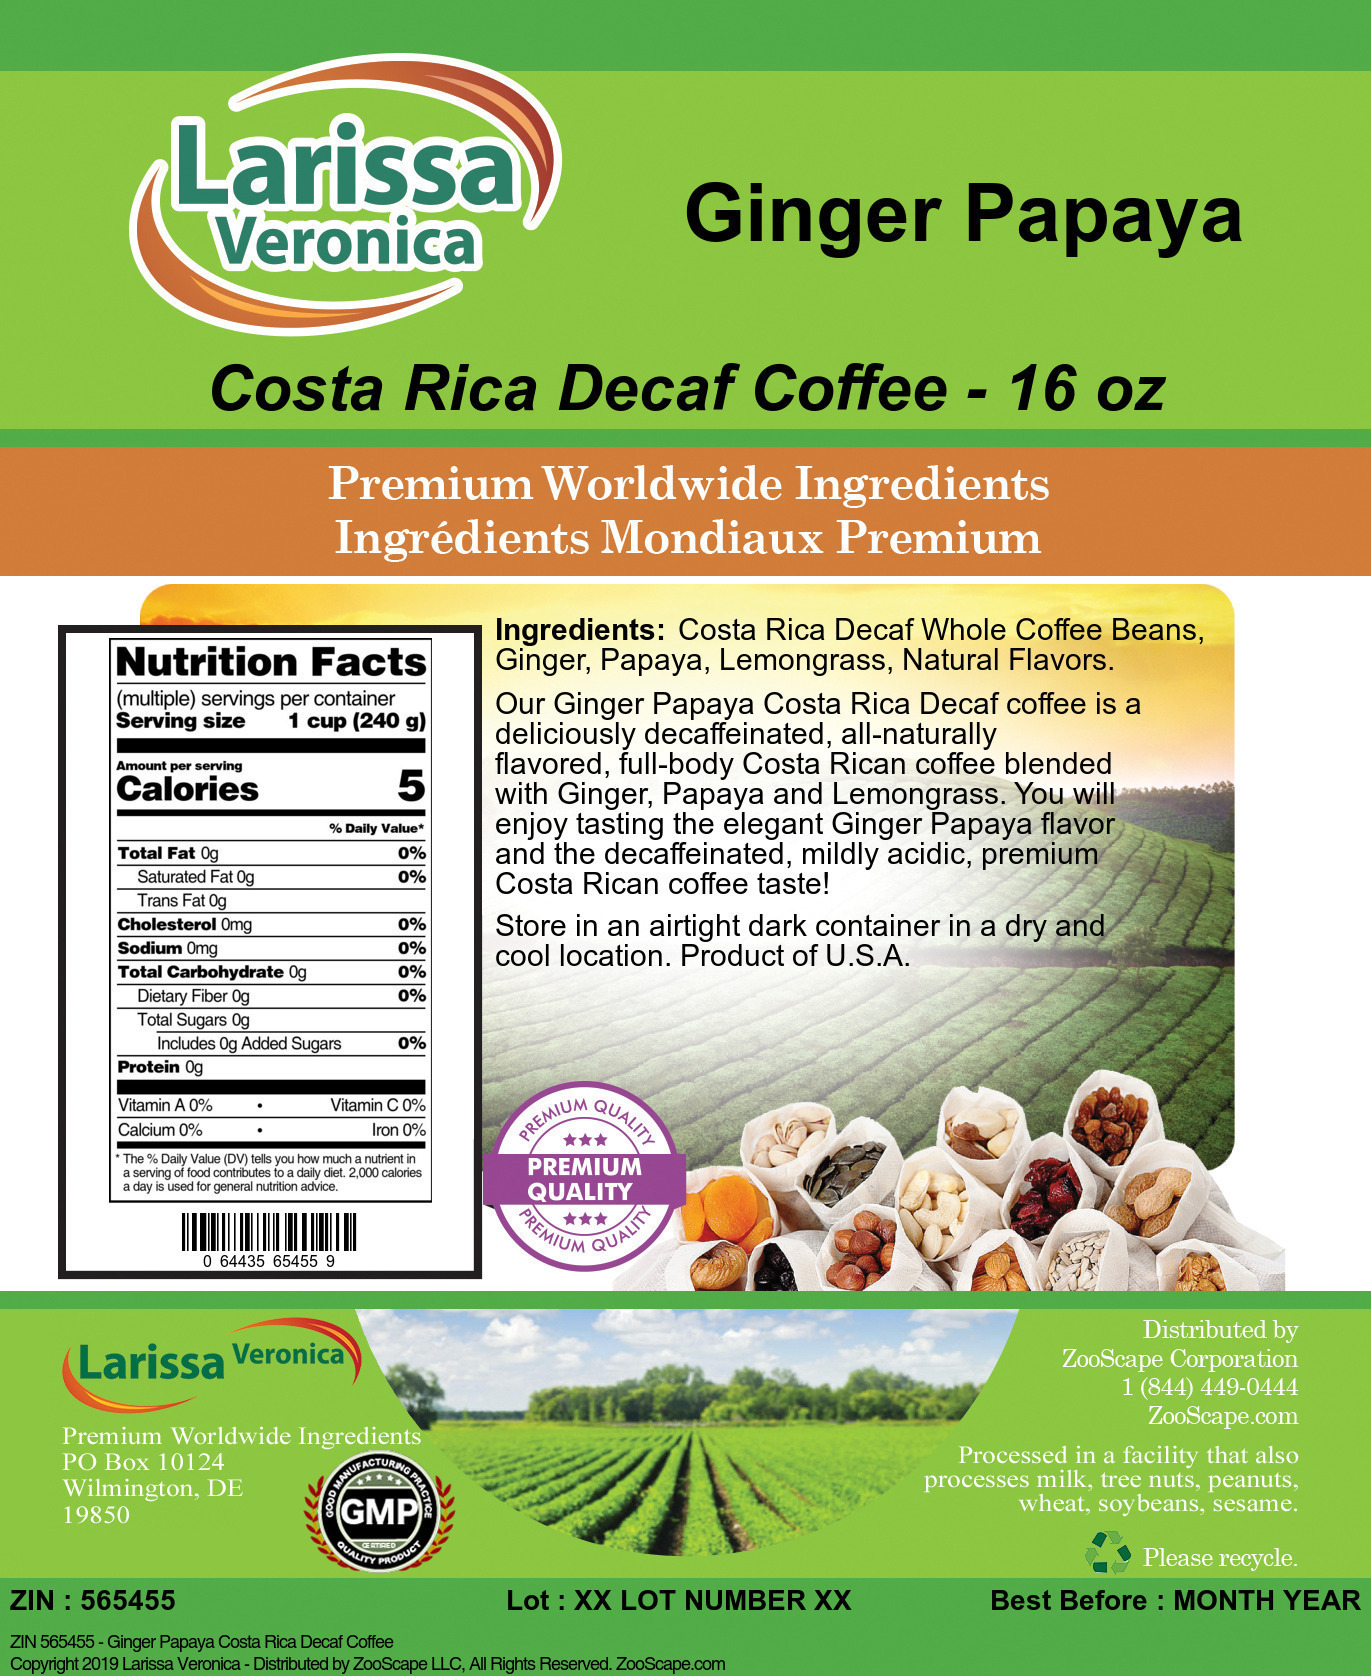 Ginger Papaya Costa Rica Decaf Coffee - Label